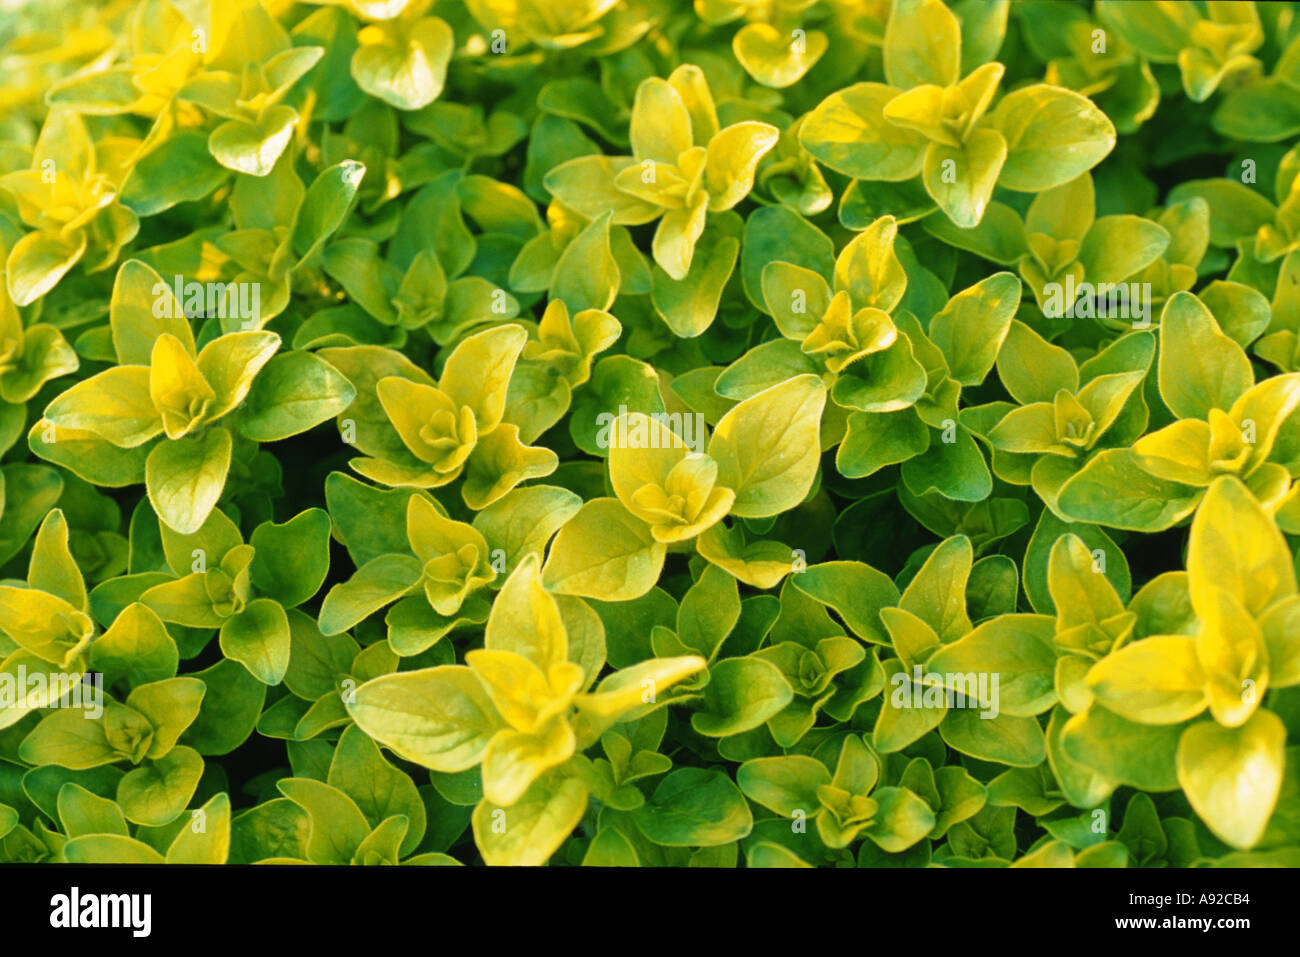 Medicinal plant herb spice Oreganum Stock Photo